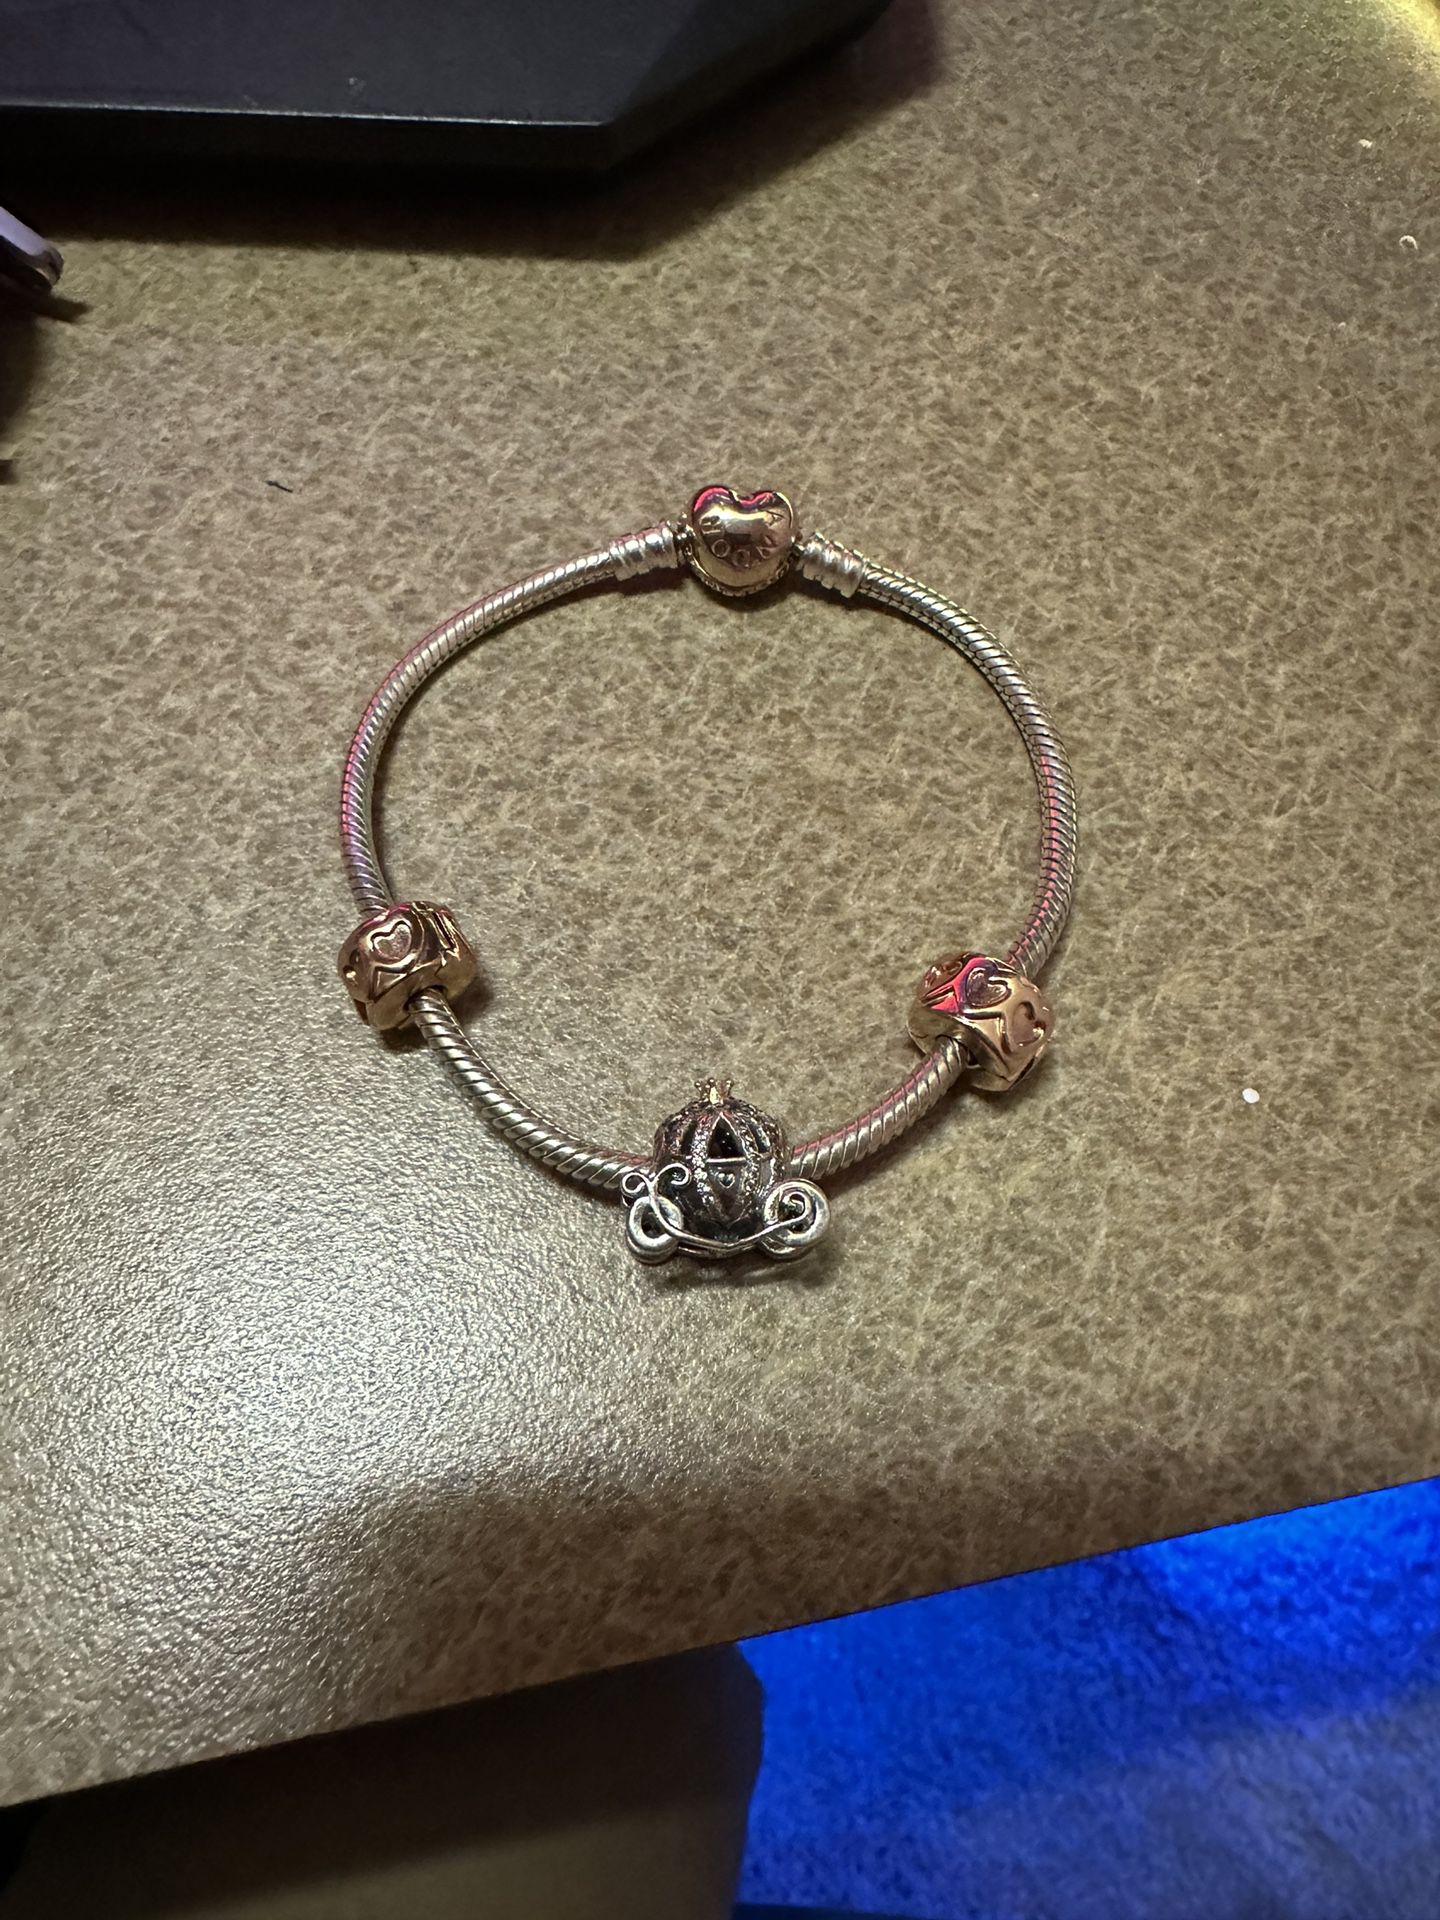 Pandora Charm Bracelet